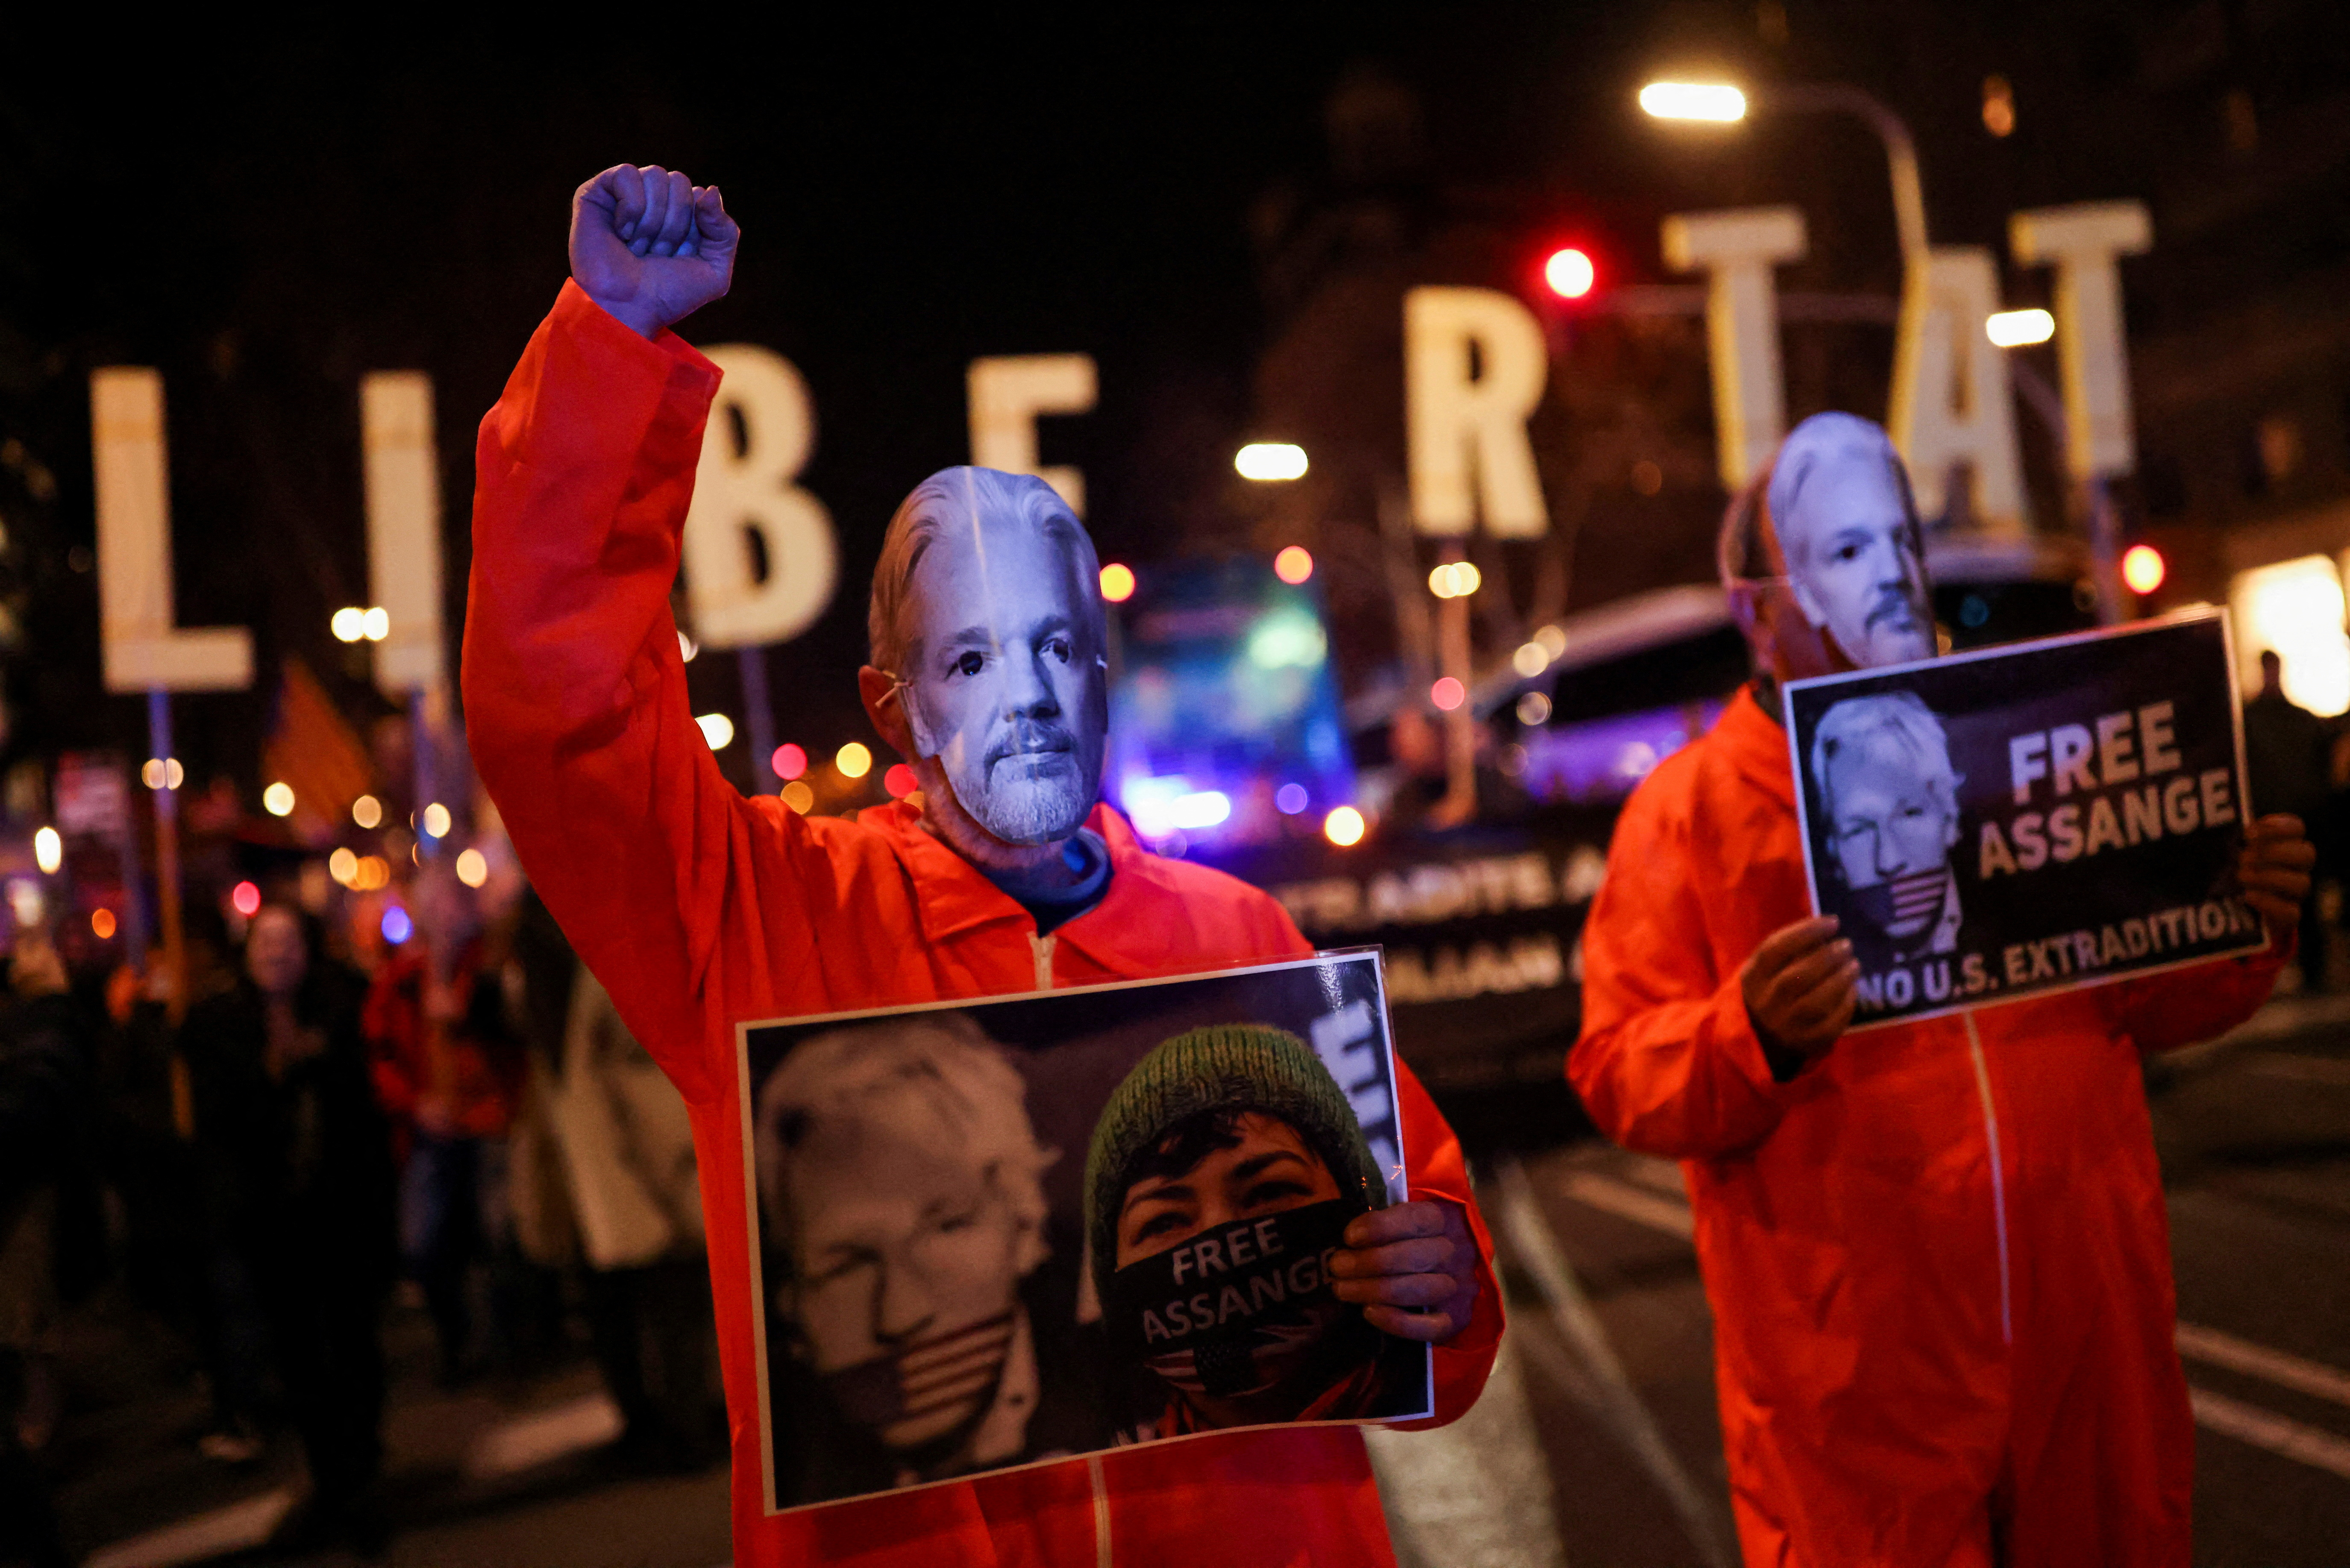 WikiLeaks founder Julian Assange's supporters demonstrate against U.S. extradition in Barcelona